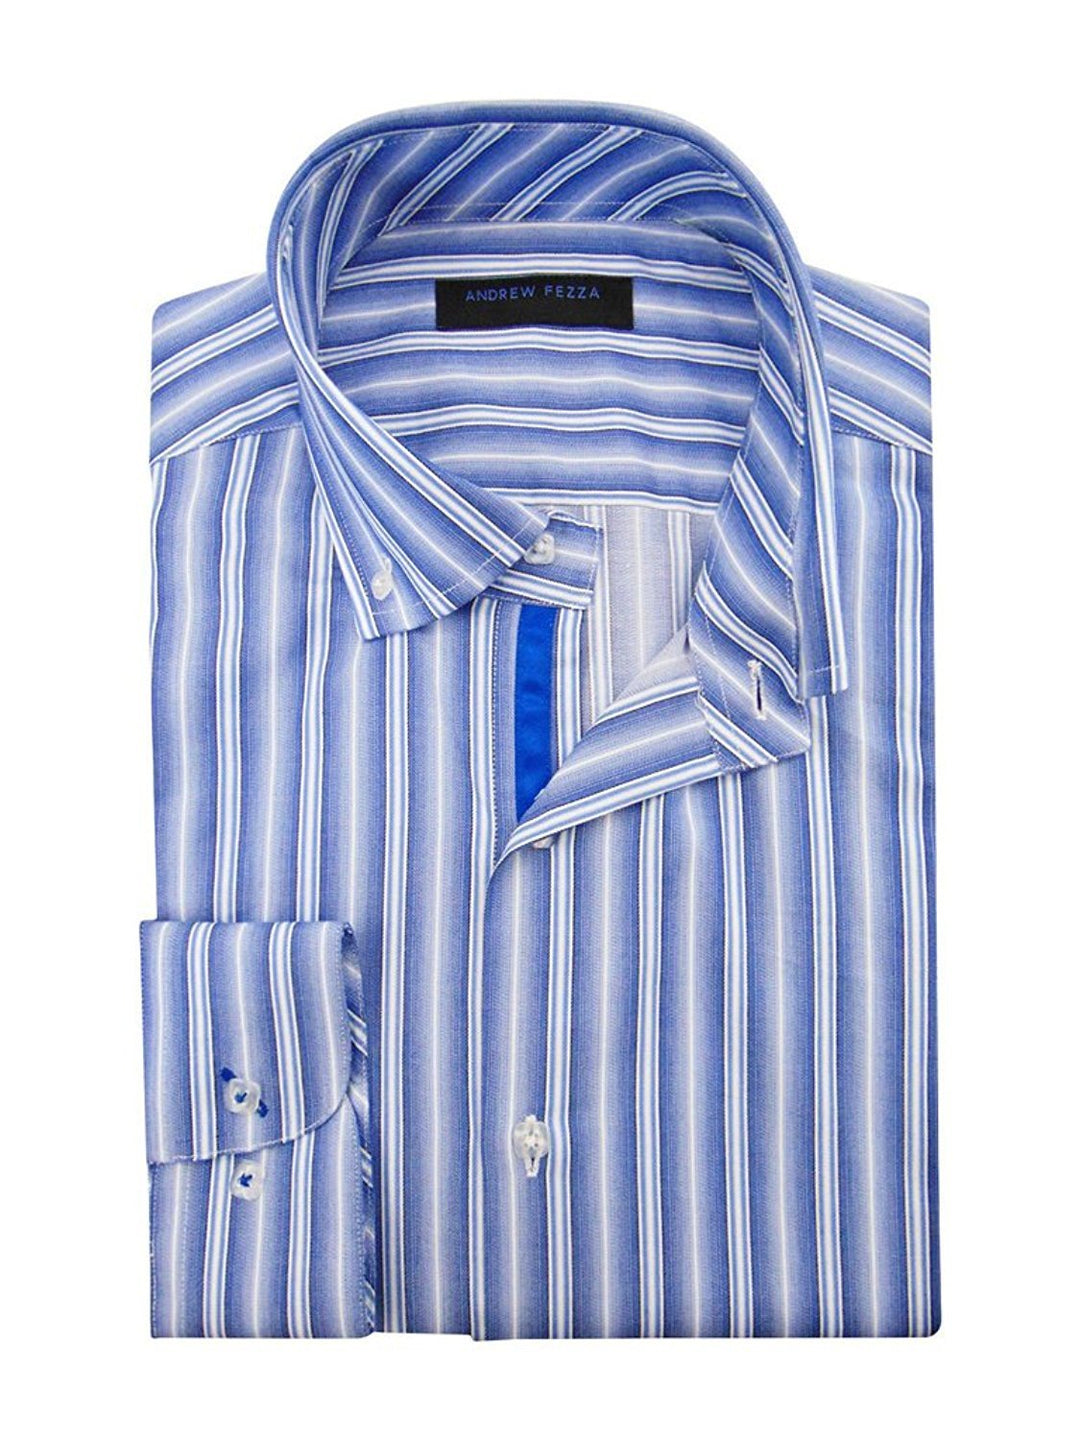 Andrew Fezza Men's Striped Dress Shirt - CLEARANCE